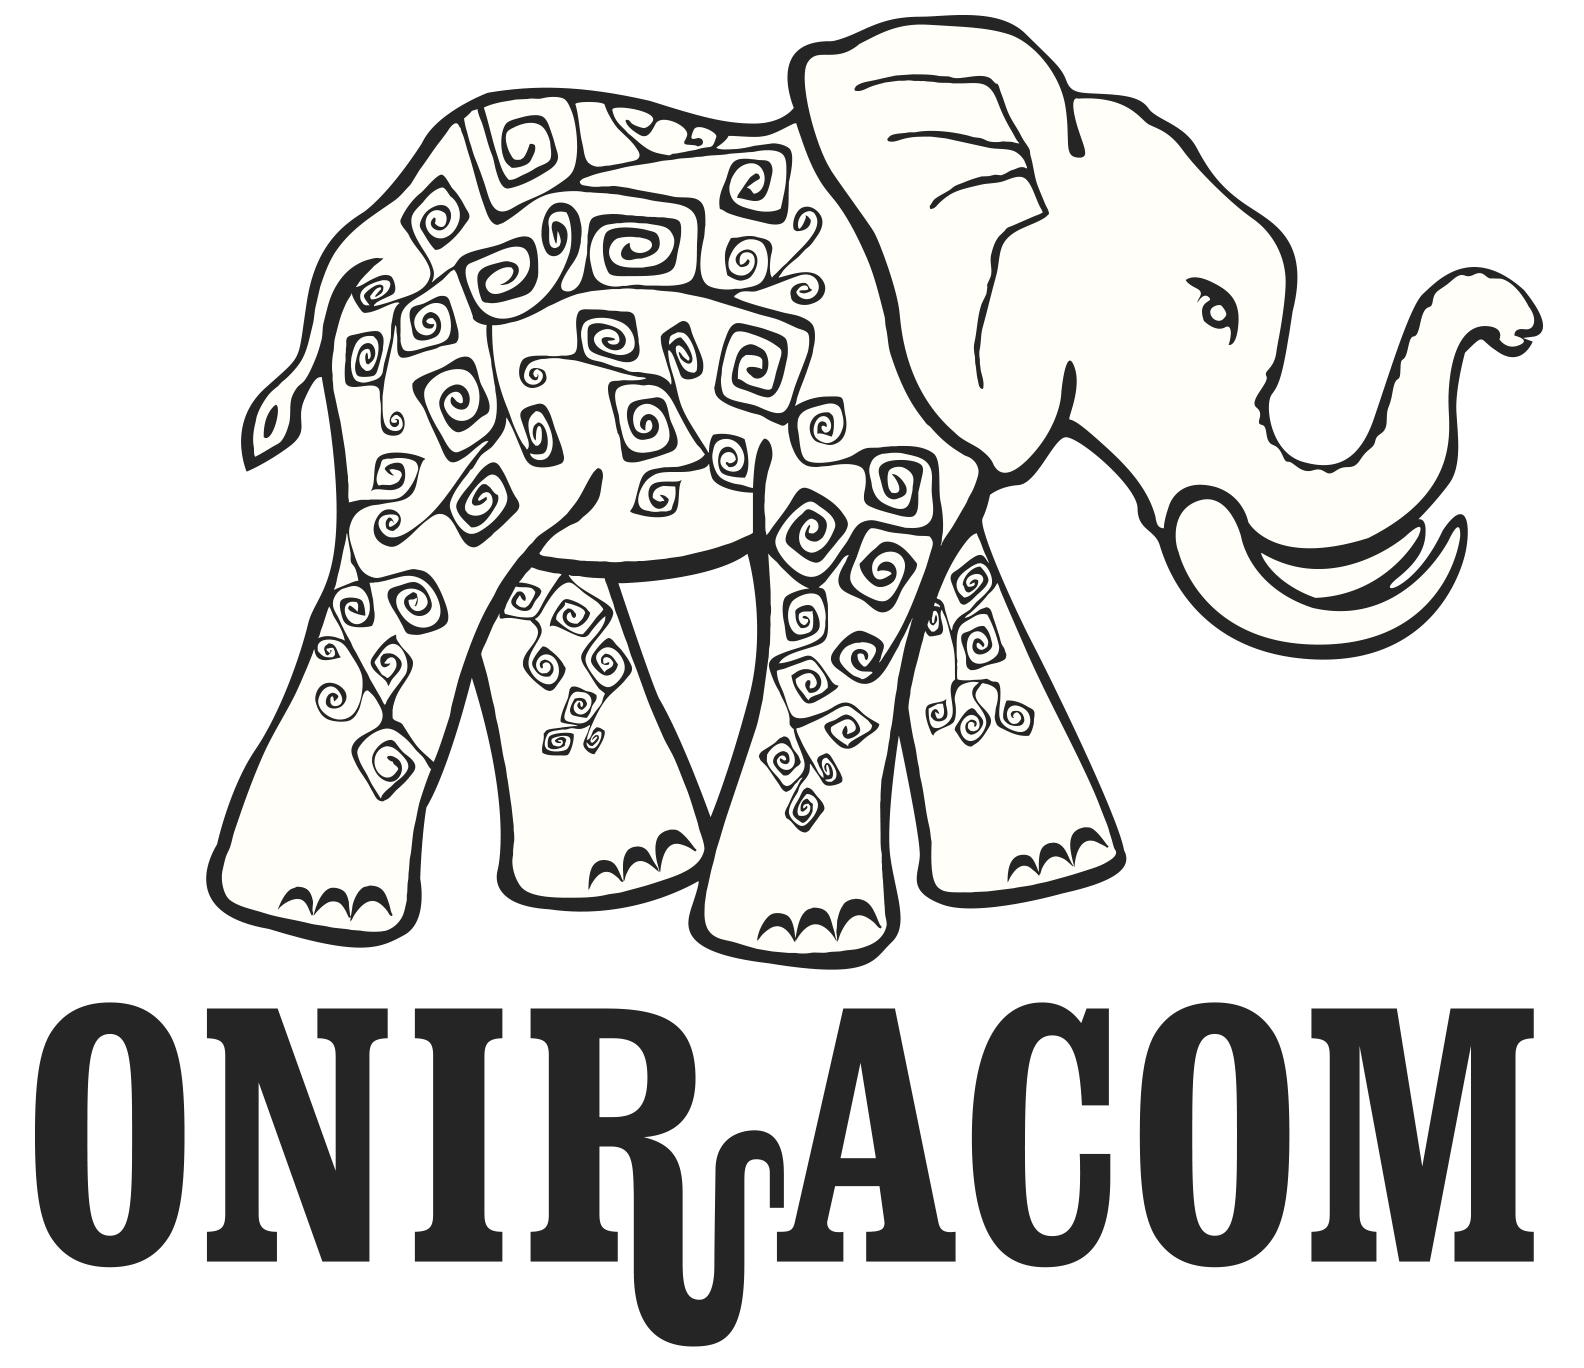 Oniracom-Logo-4Color-Vert-noslogan--rwrwrw.png